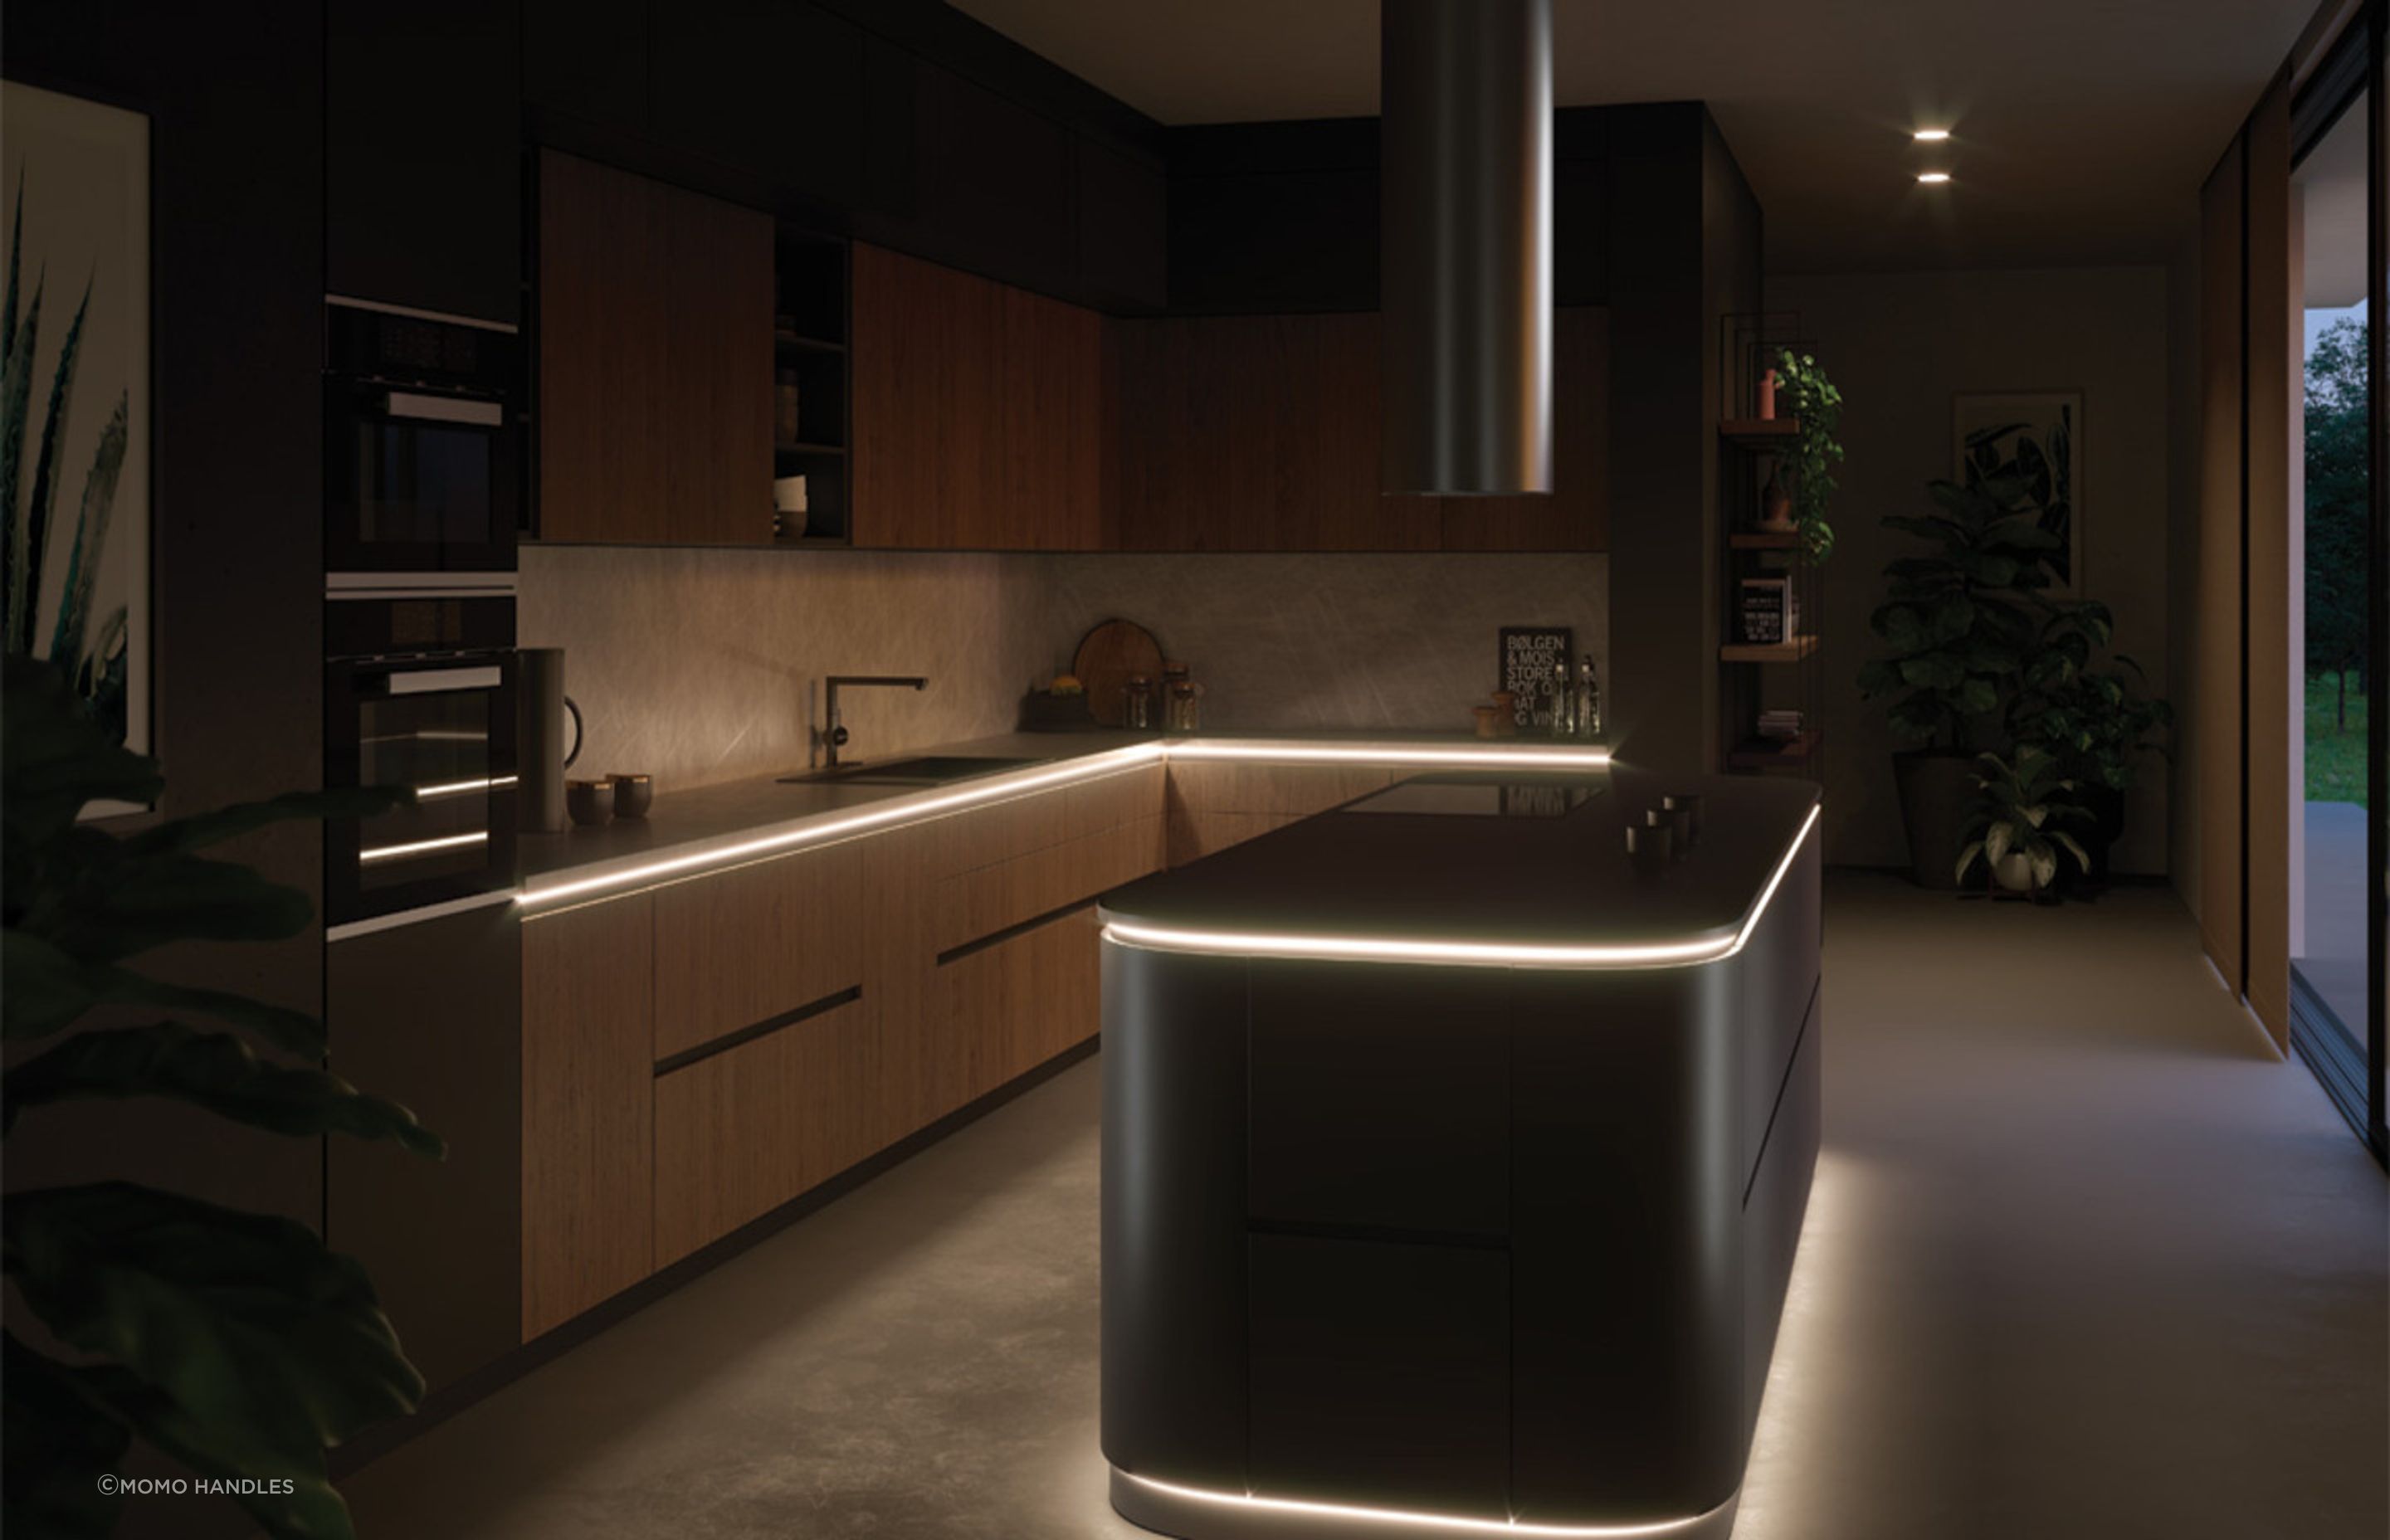 Cabinet LED lighting illuminating the kitchen workspace, providing both task lighting and aesthetic appeal